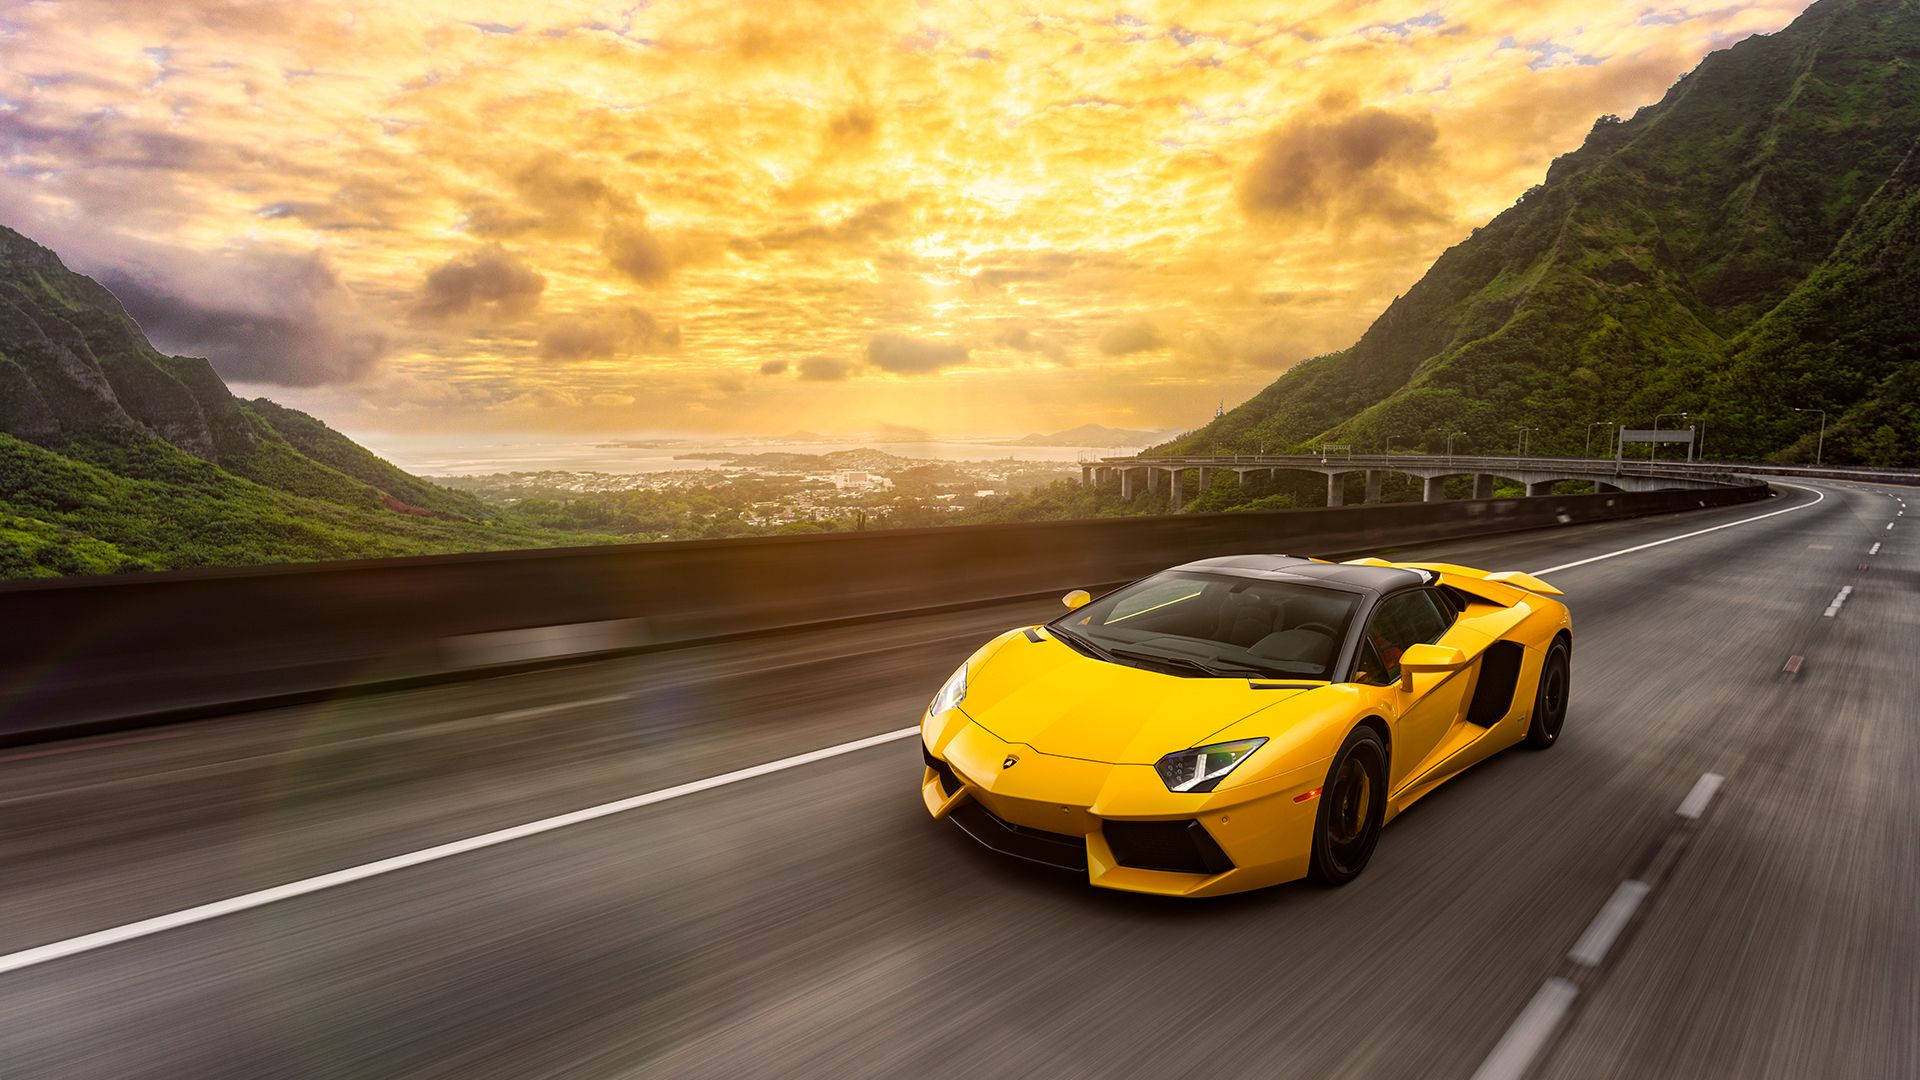 A Yellow Lamborghini Aventador In Motion. Background